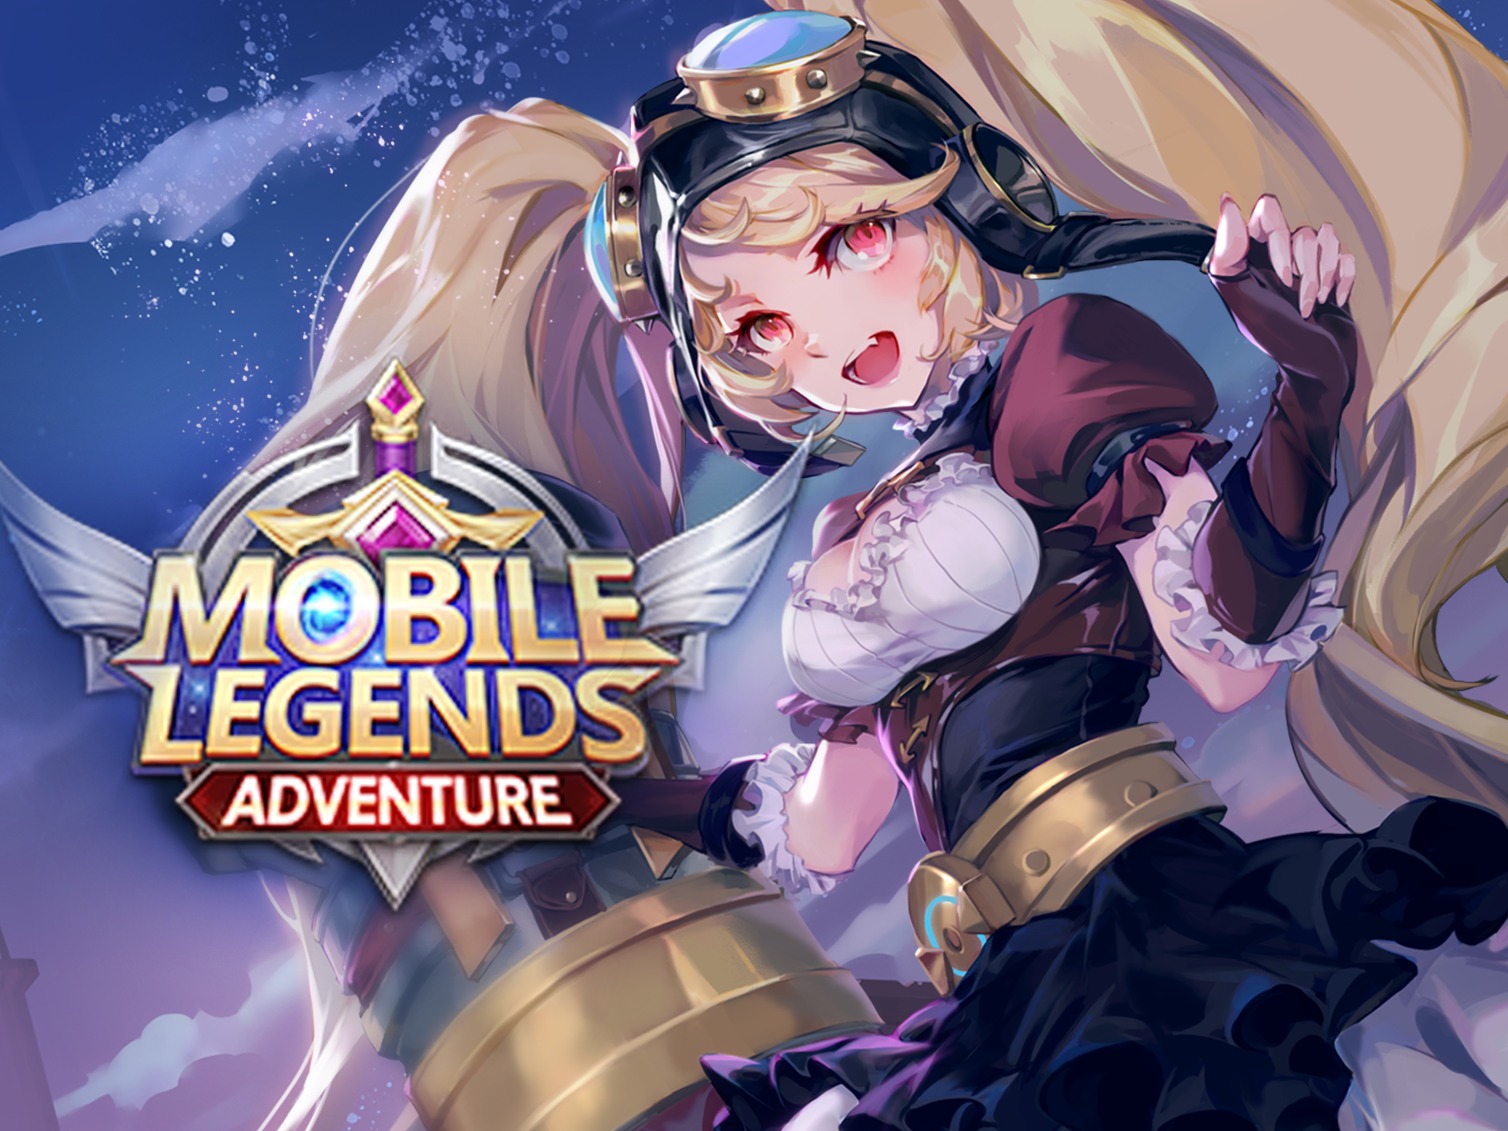 《mobile legends adventure》轻松策略放置类手游项目